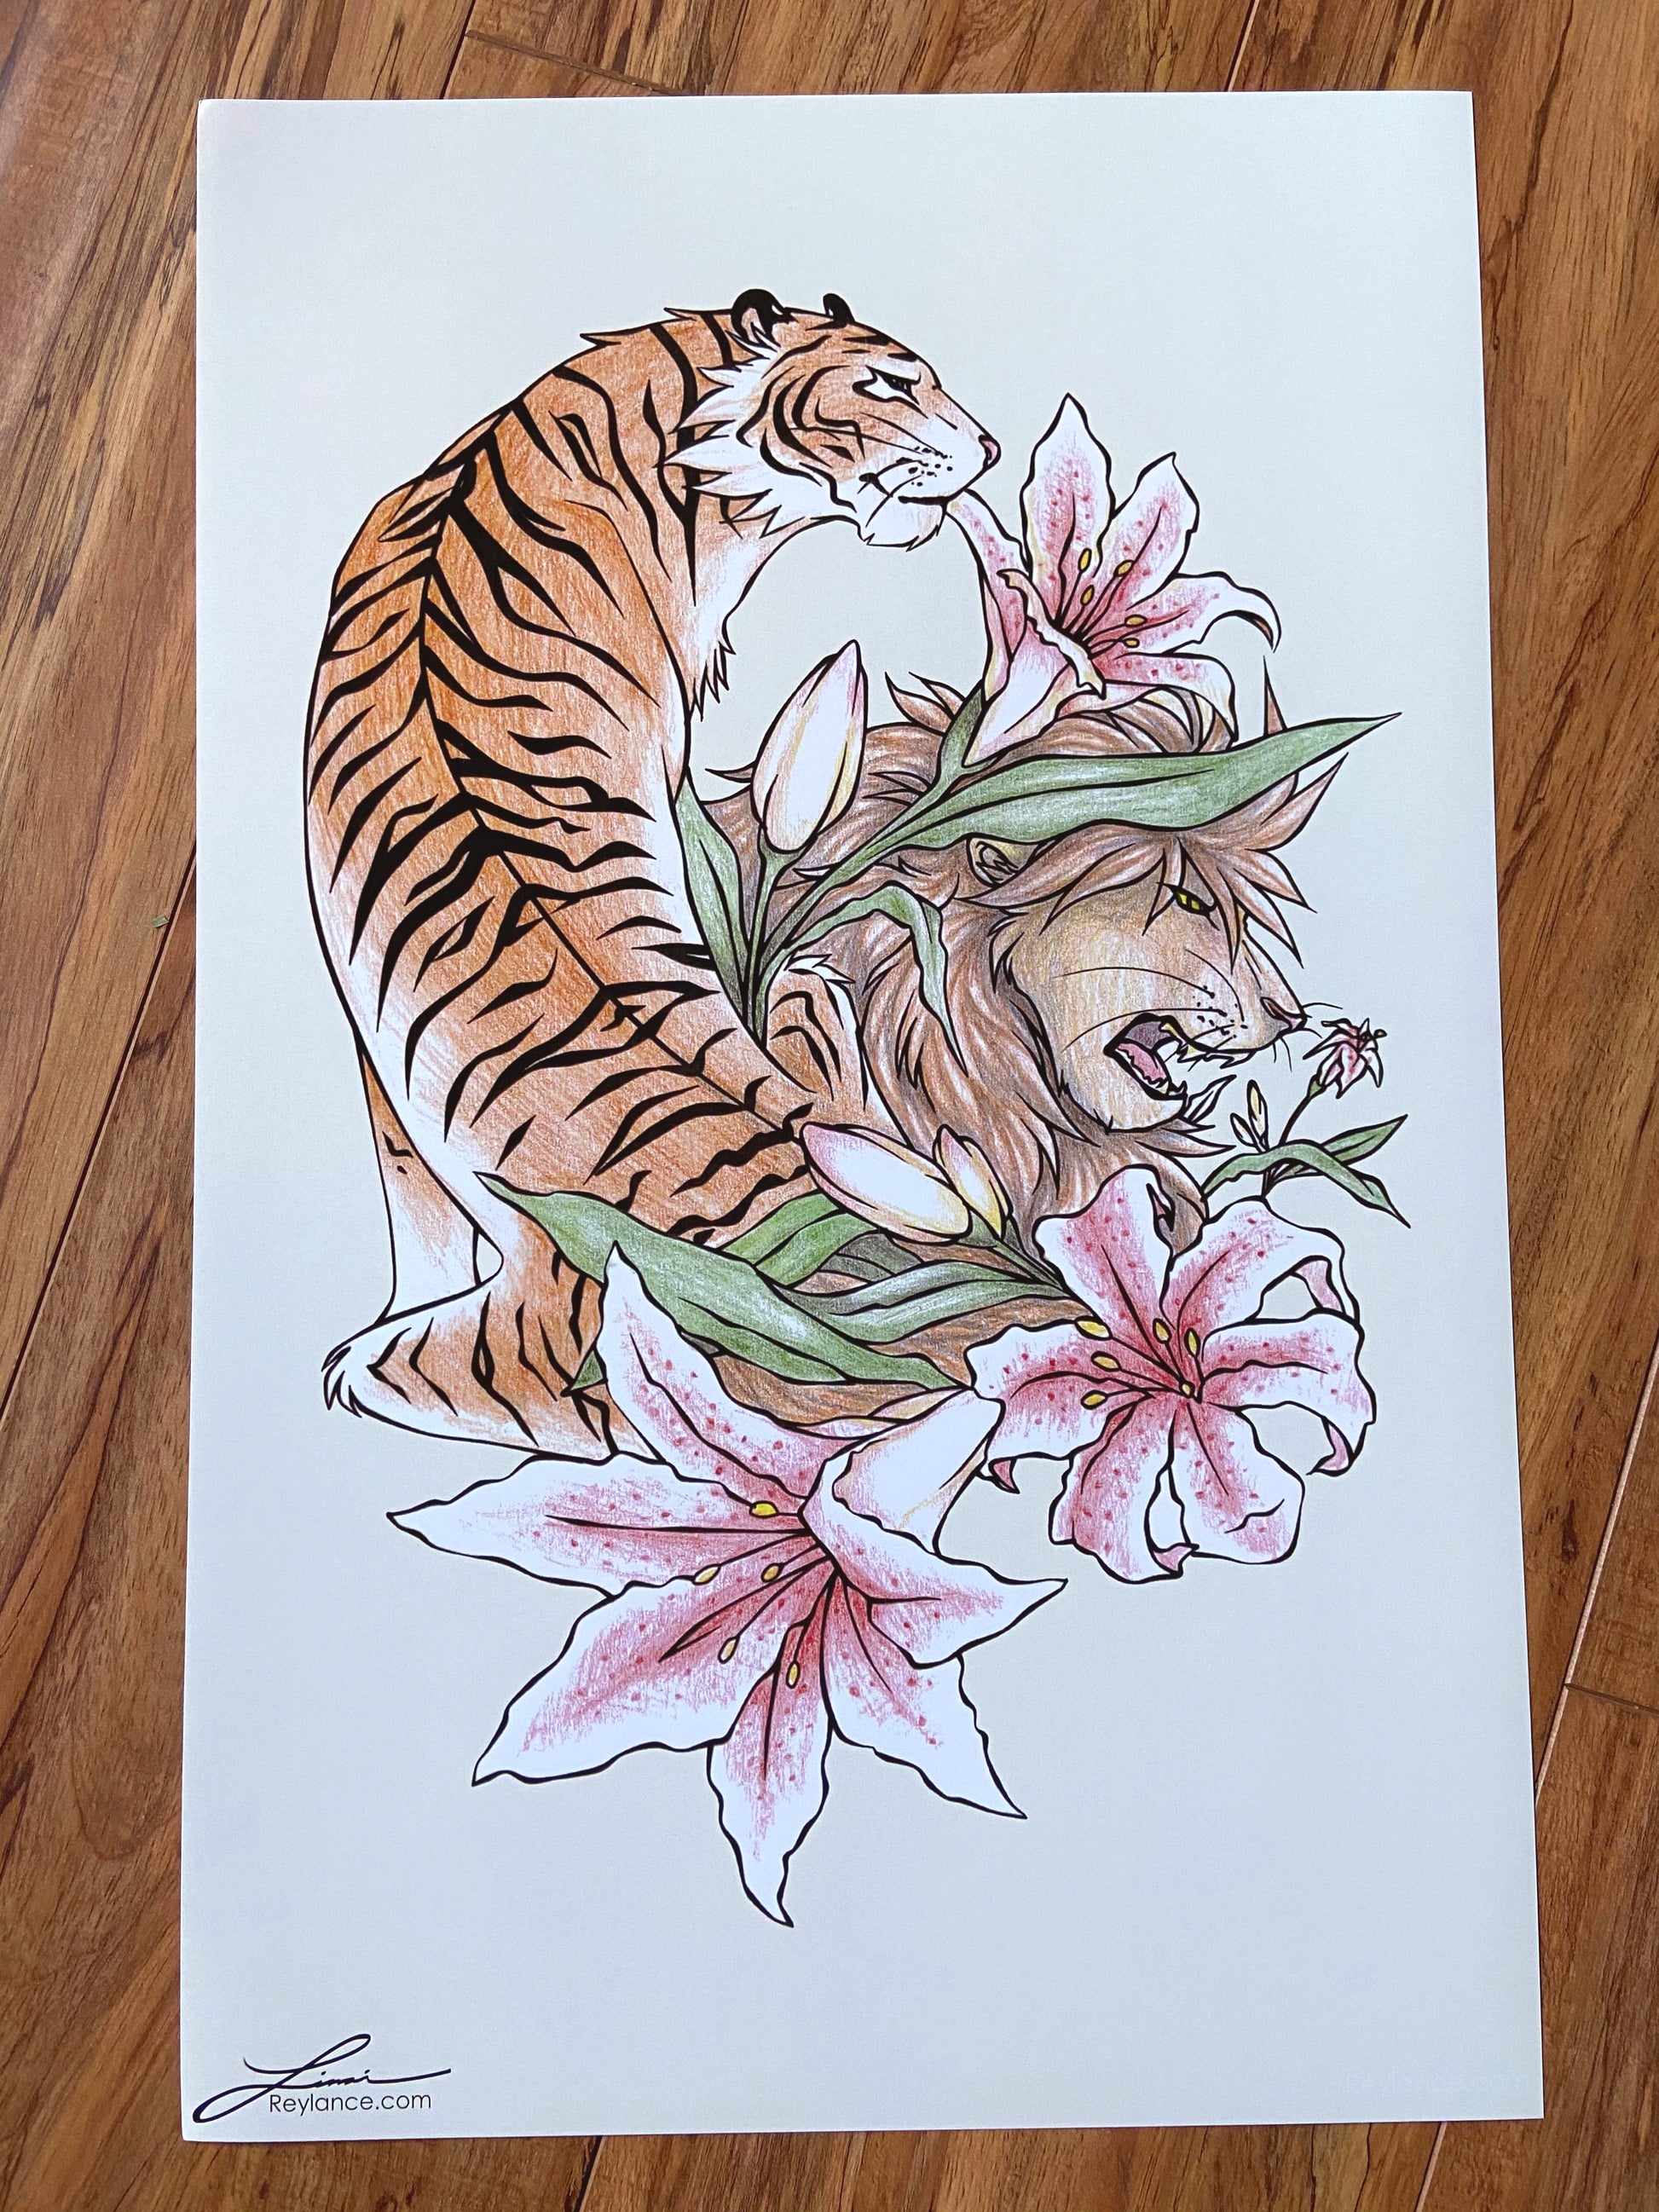 Tiger, Lily, Lion Print - Art By Linai